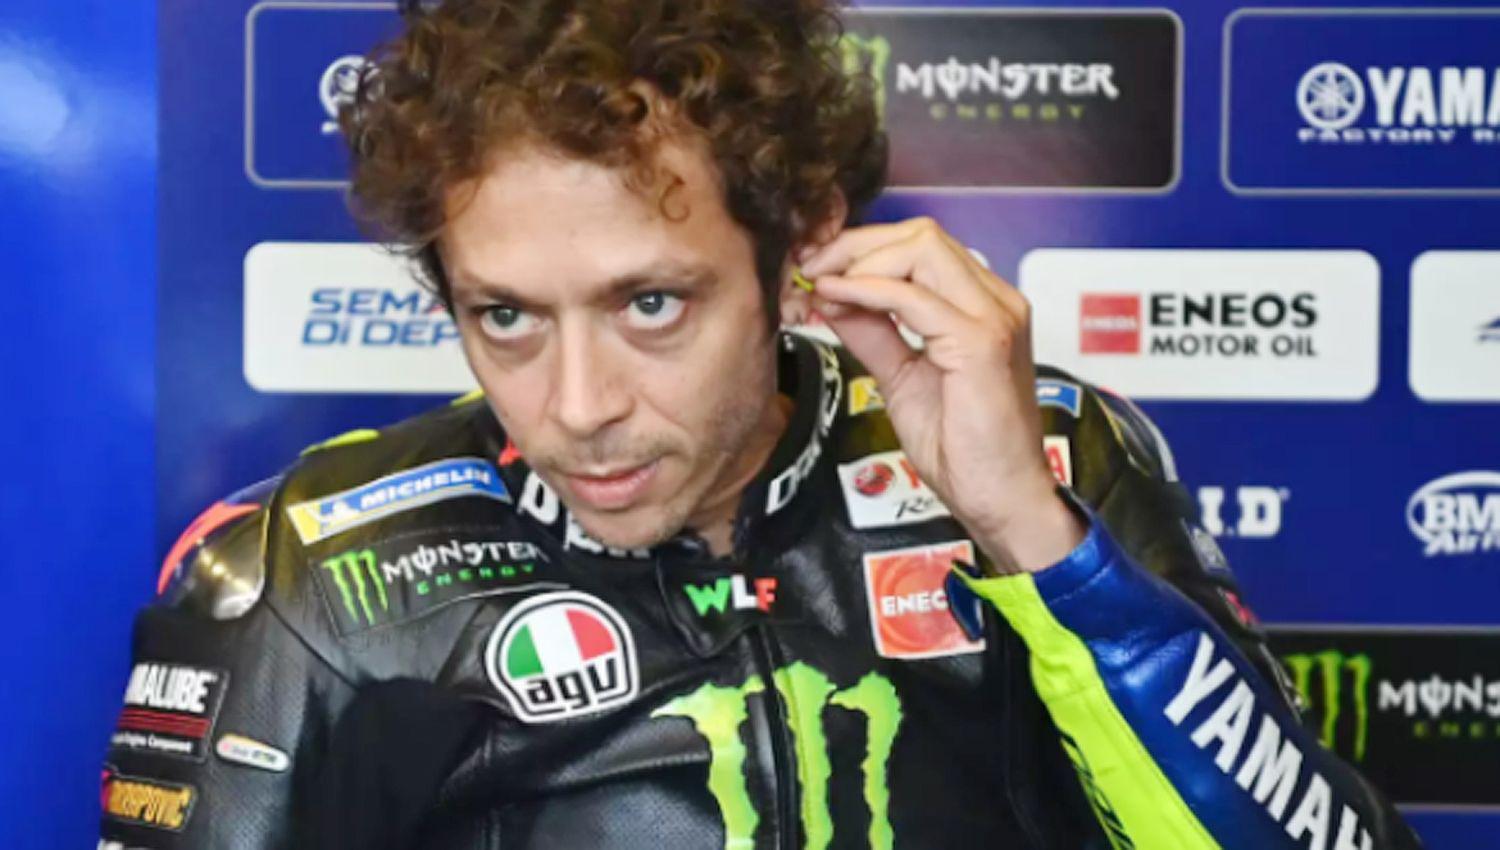 MotoGP- Valentino Rossi dio positivo al coronavirus